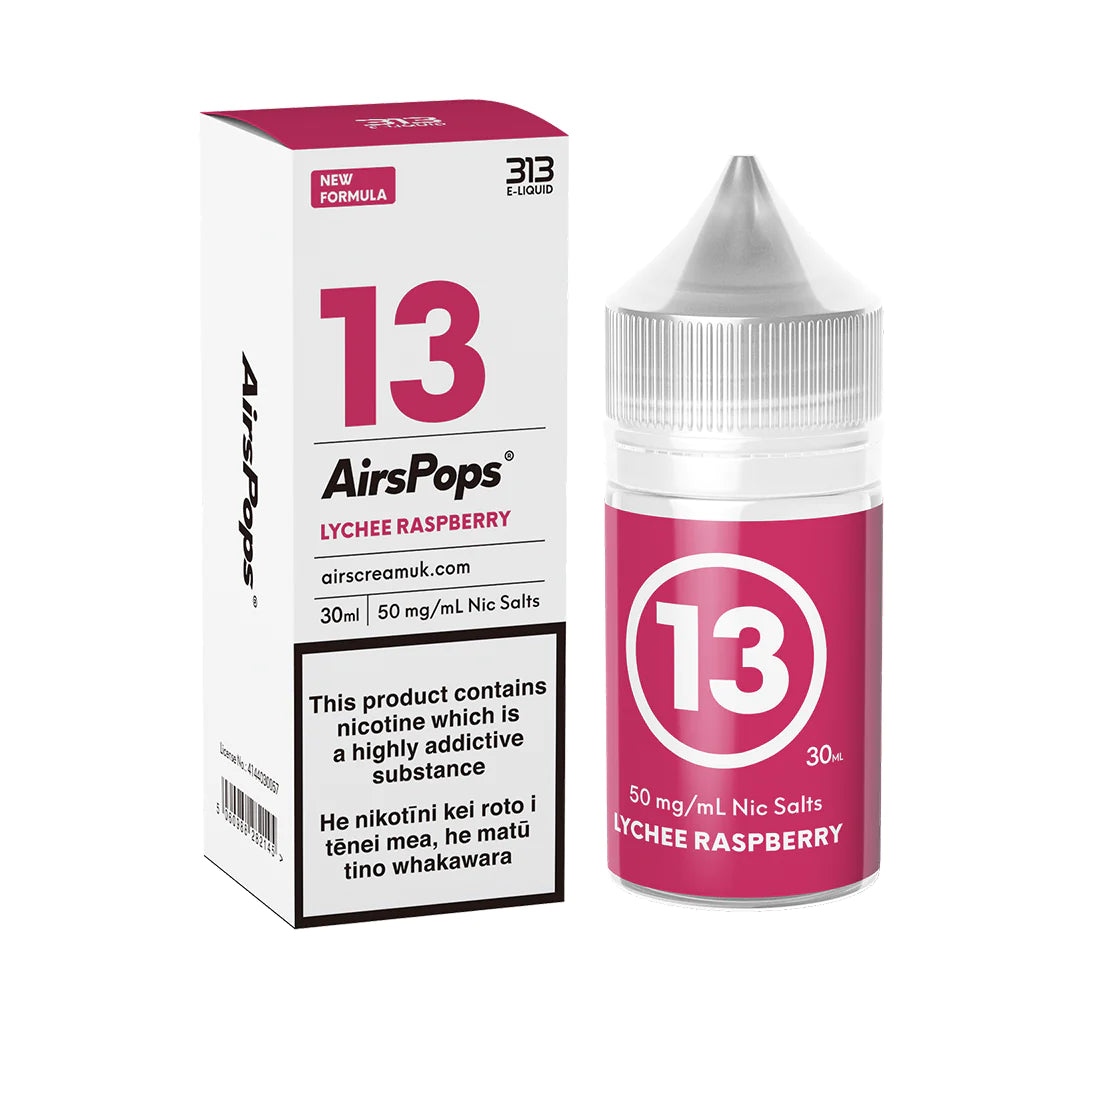 Airspops- Lychee Raspberry- 30ml Nic salt 50mg/ml